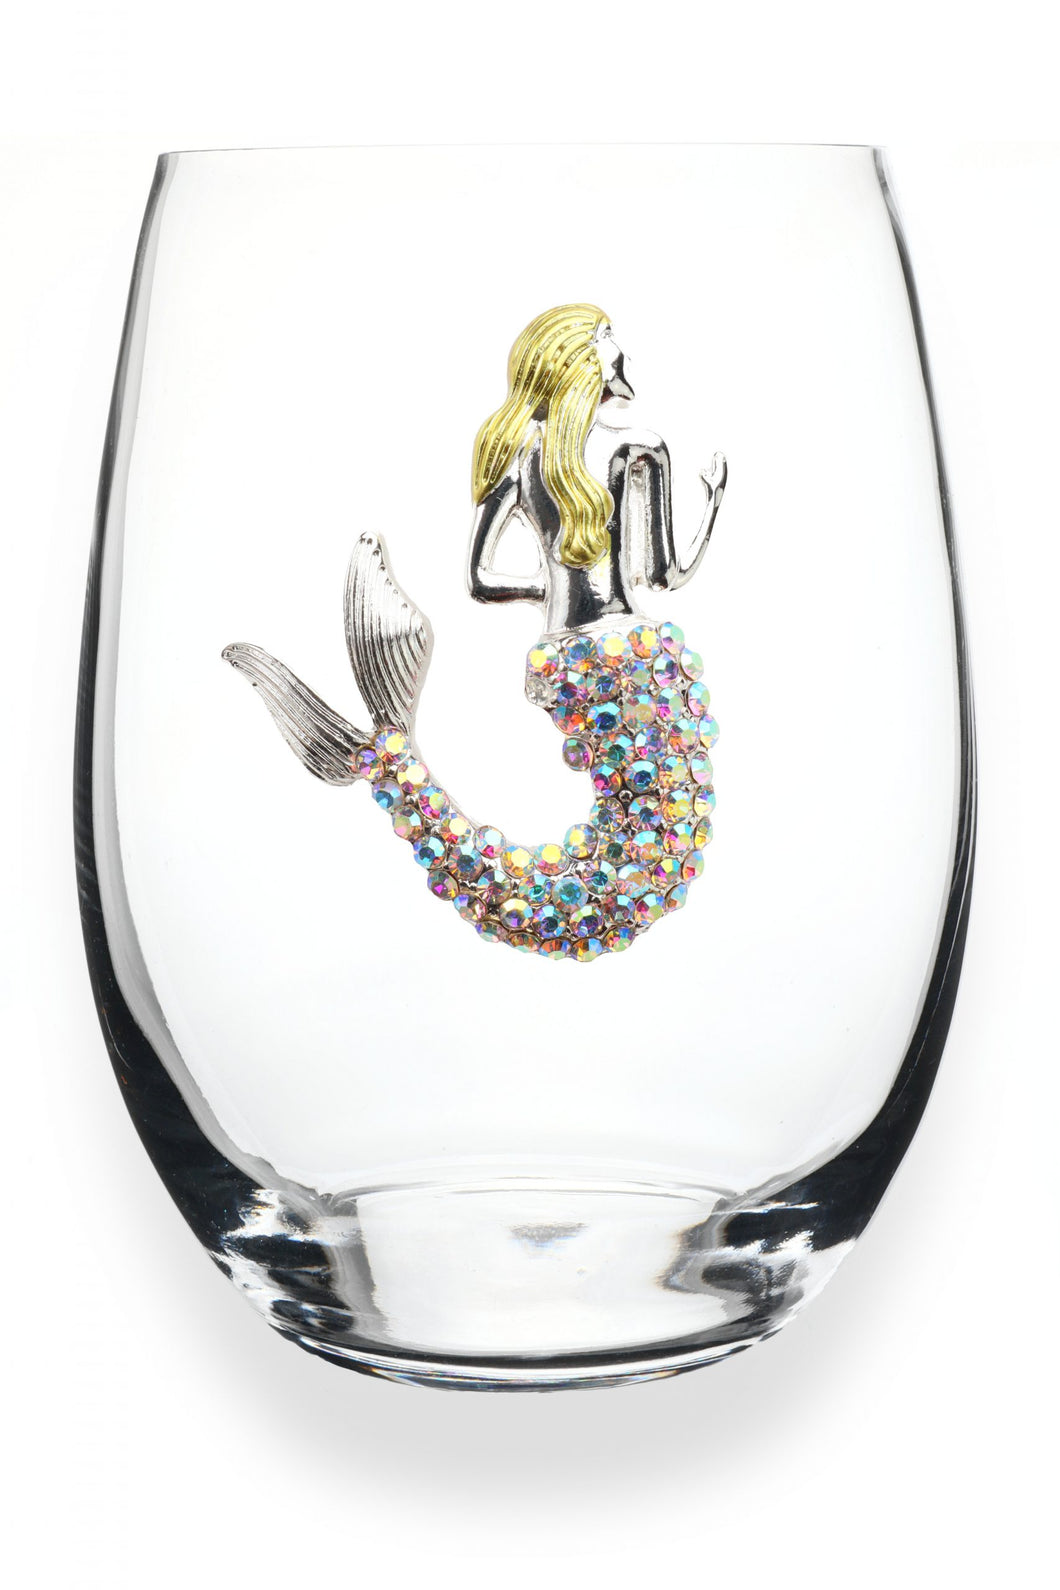 Aurora Borealis Mermaid Jeweled Stemless Glass